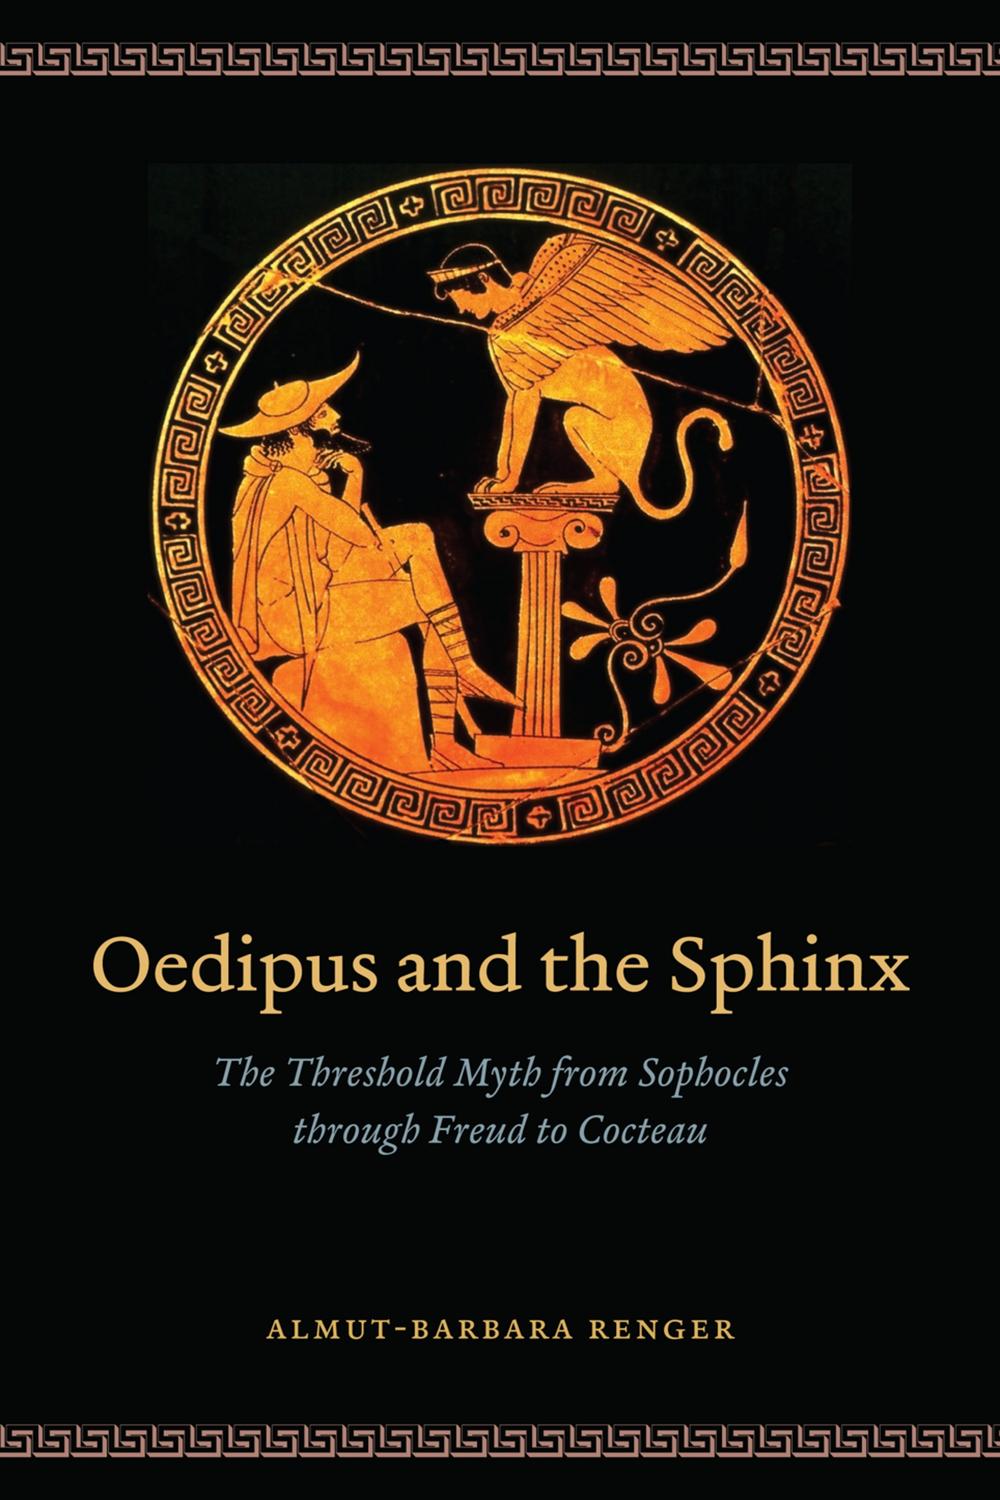 Oedipus and the Sphinx - Almut-Barbara Renger, Duncan Alexander Smart, Rice David, John T. Hamilton